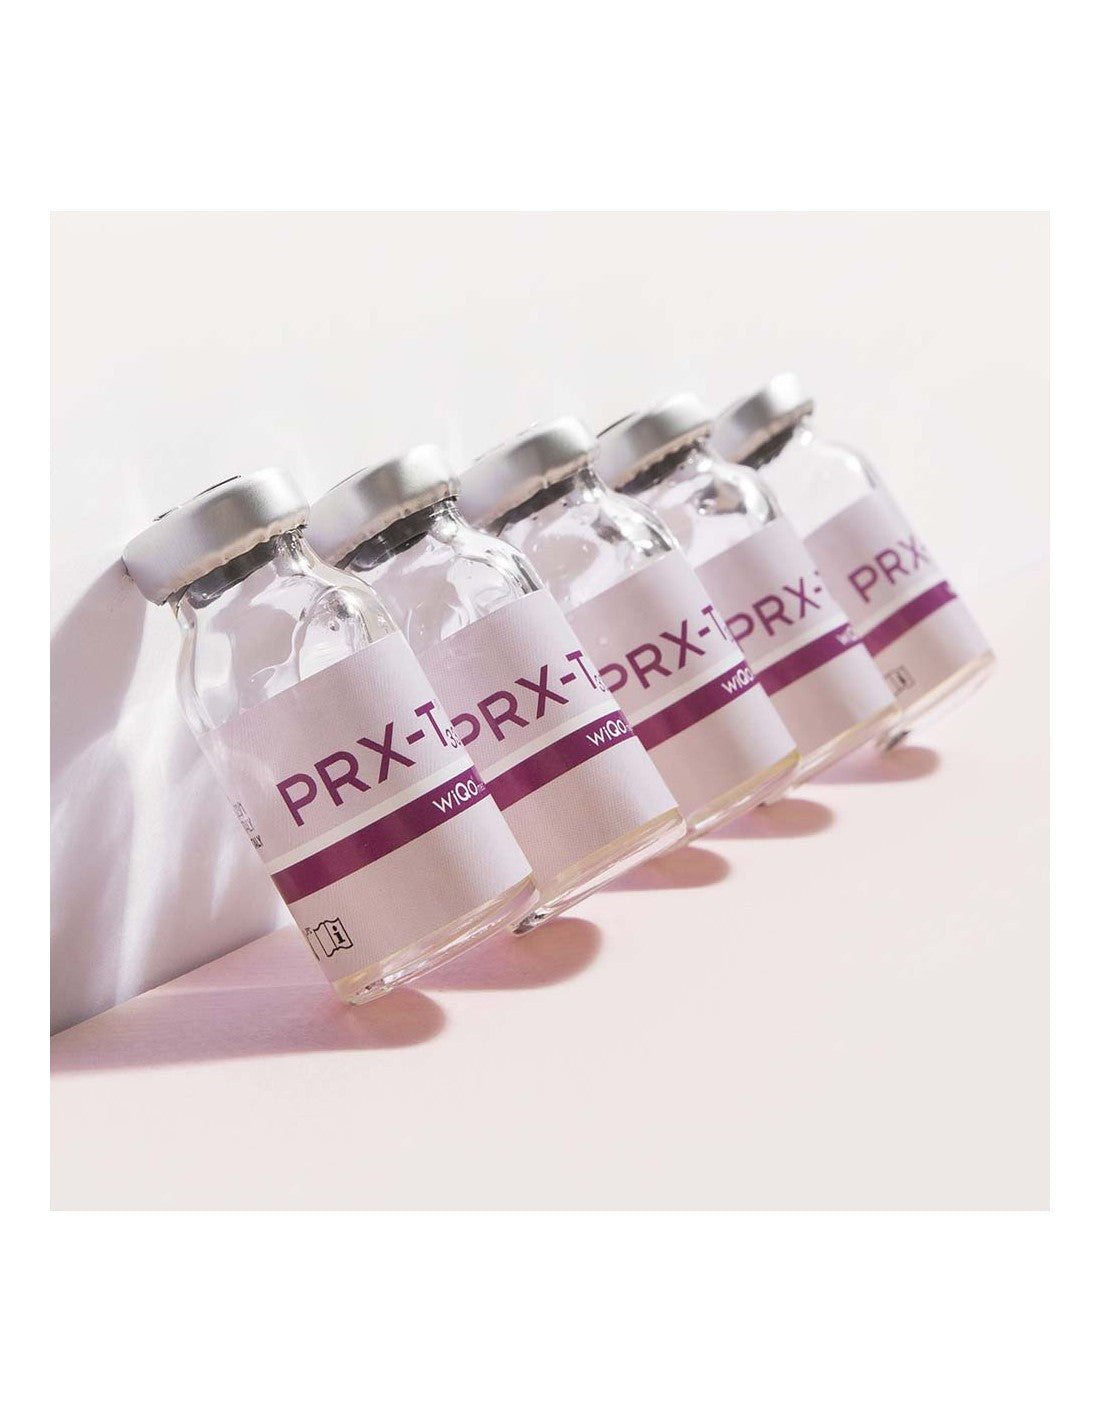 PRX – T33 beadatinė biorevitalizacija